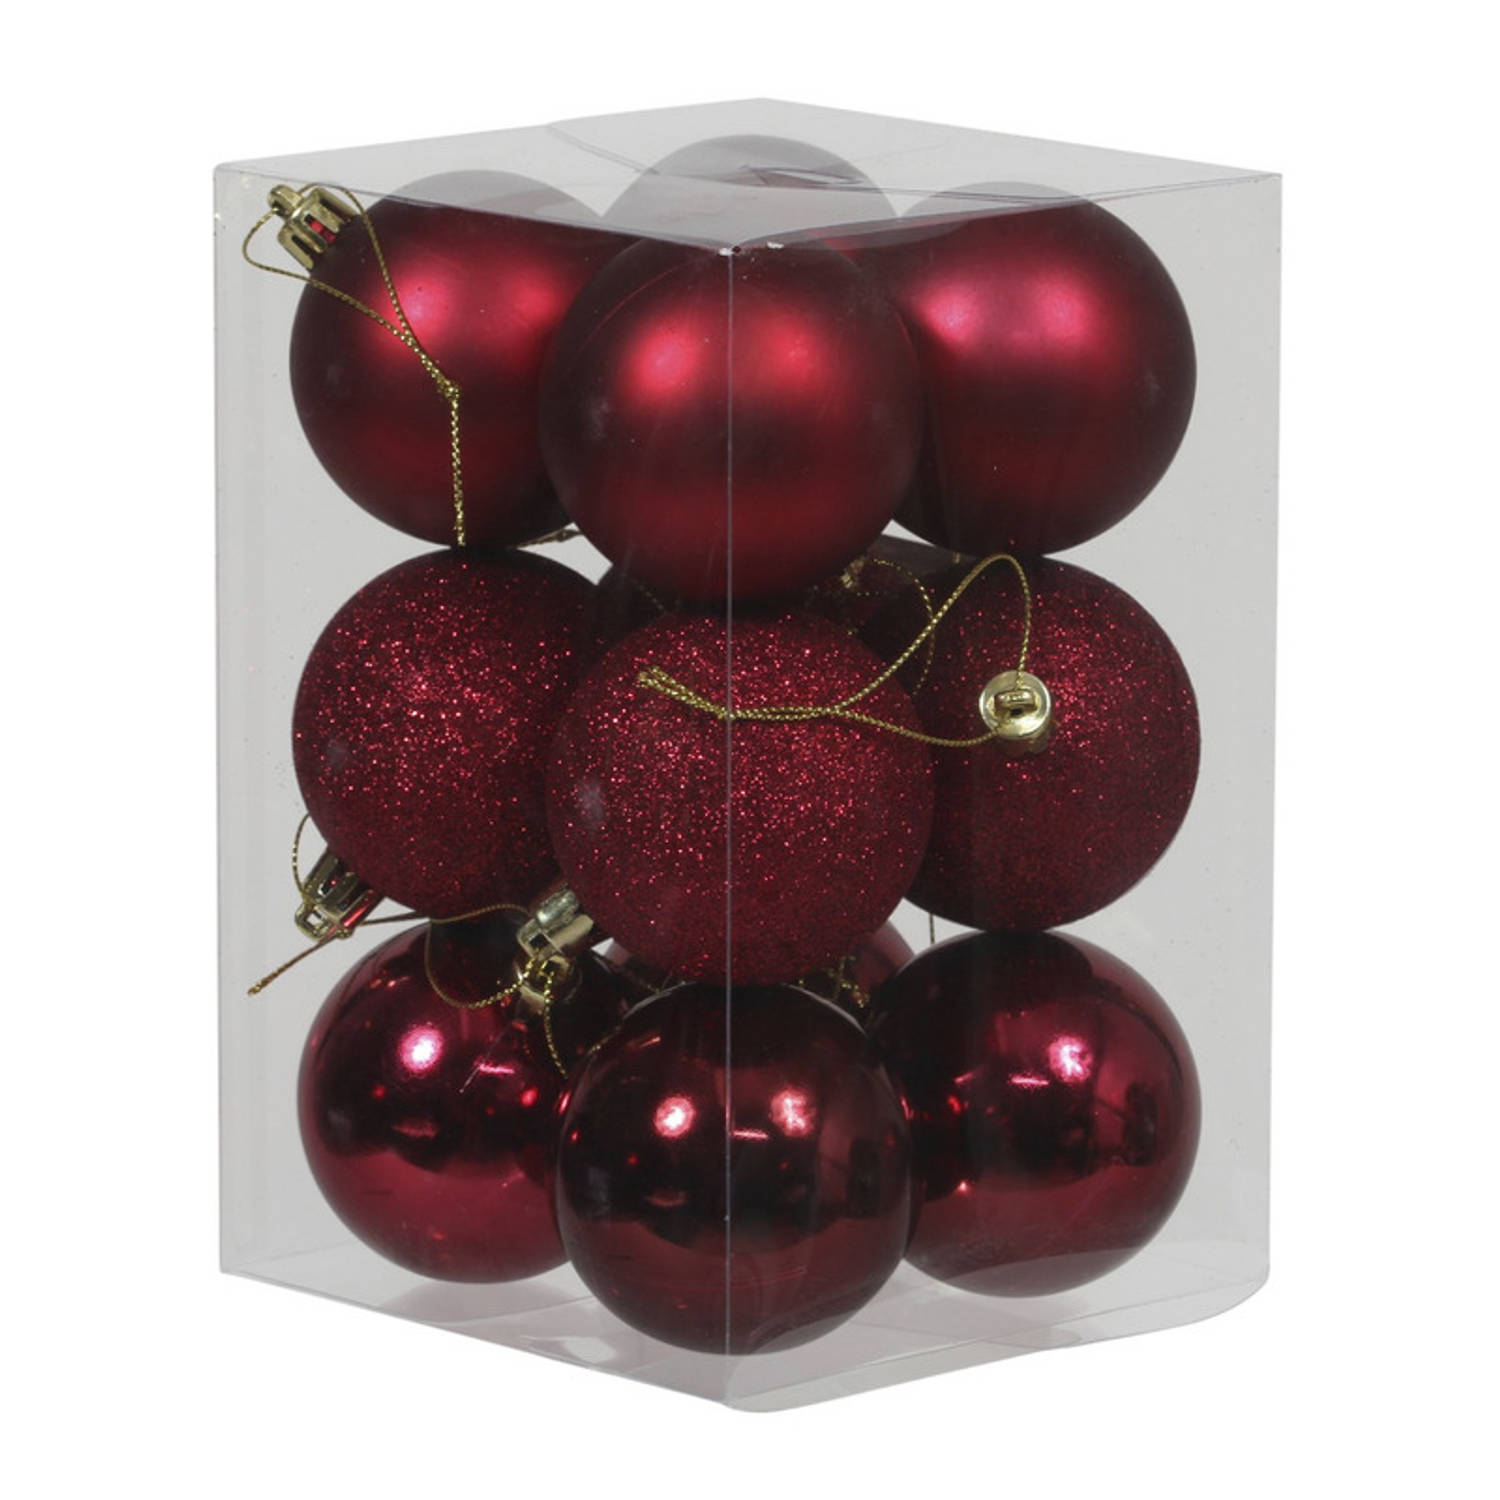 12x Donkerrode kunststof kerstballen 6 cm glans/mat/glitter - Kerstbal